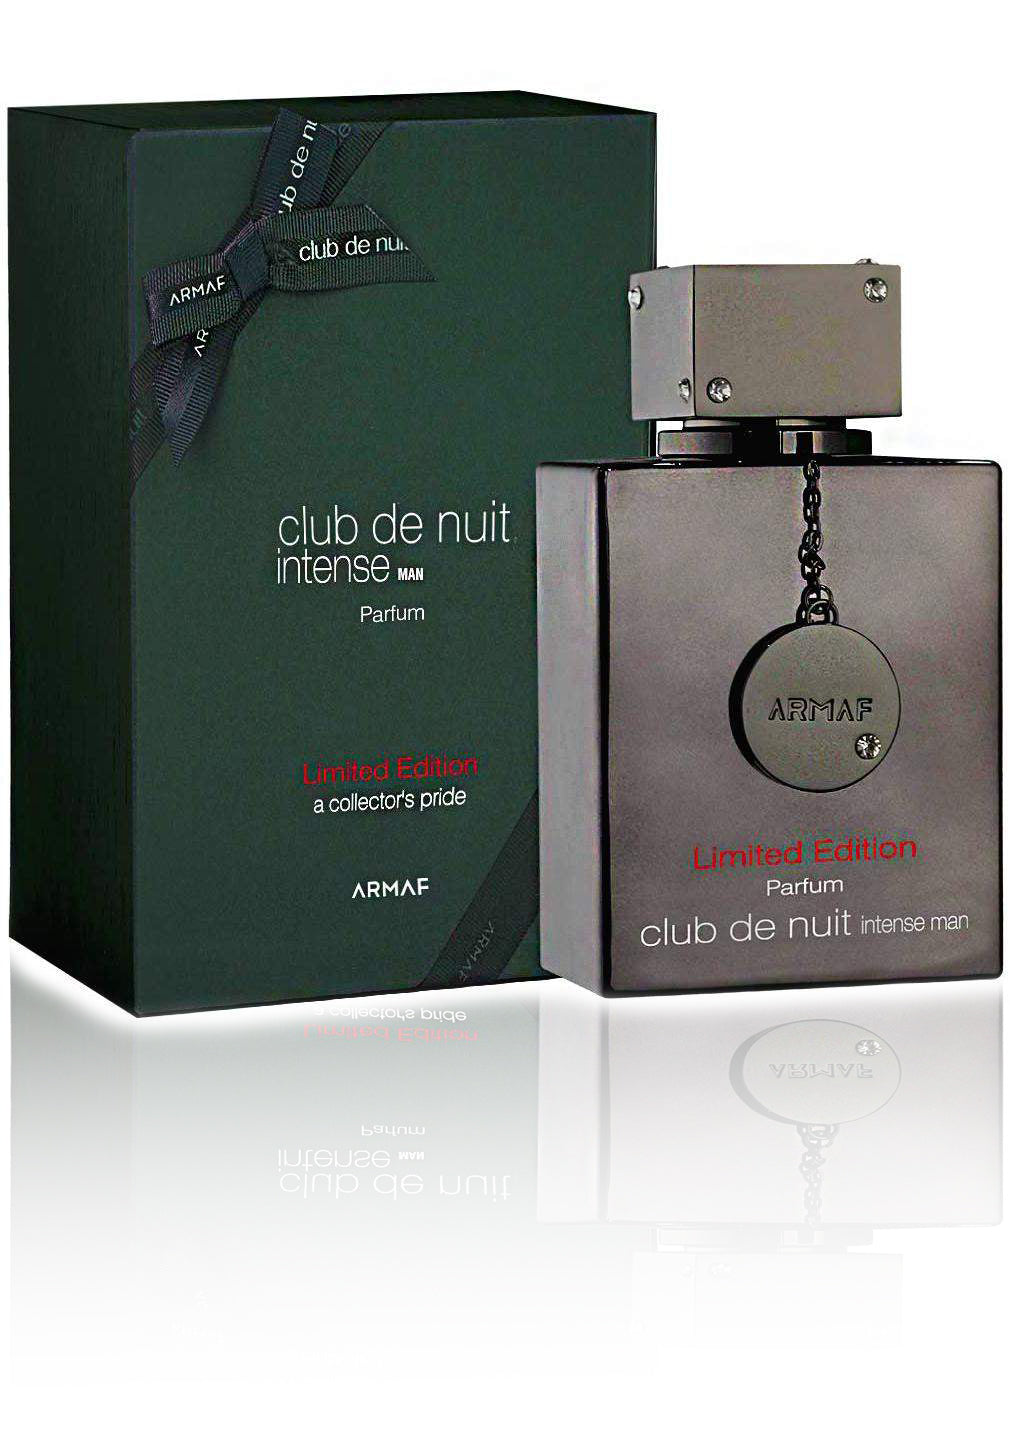 Armaf Club De Nuit Intense EDP Limited Edition Parfum (2019) M 105ml Boxed